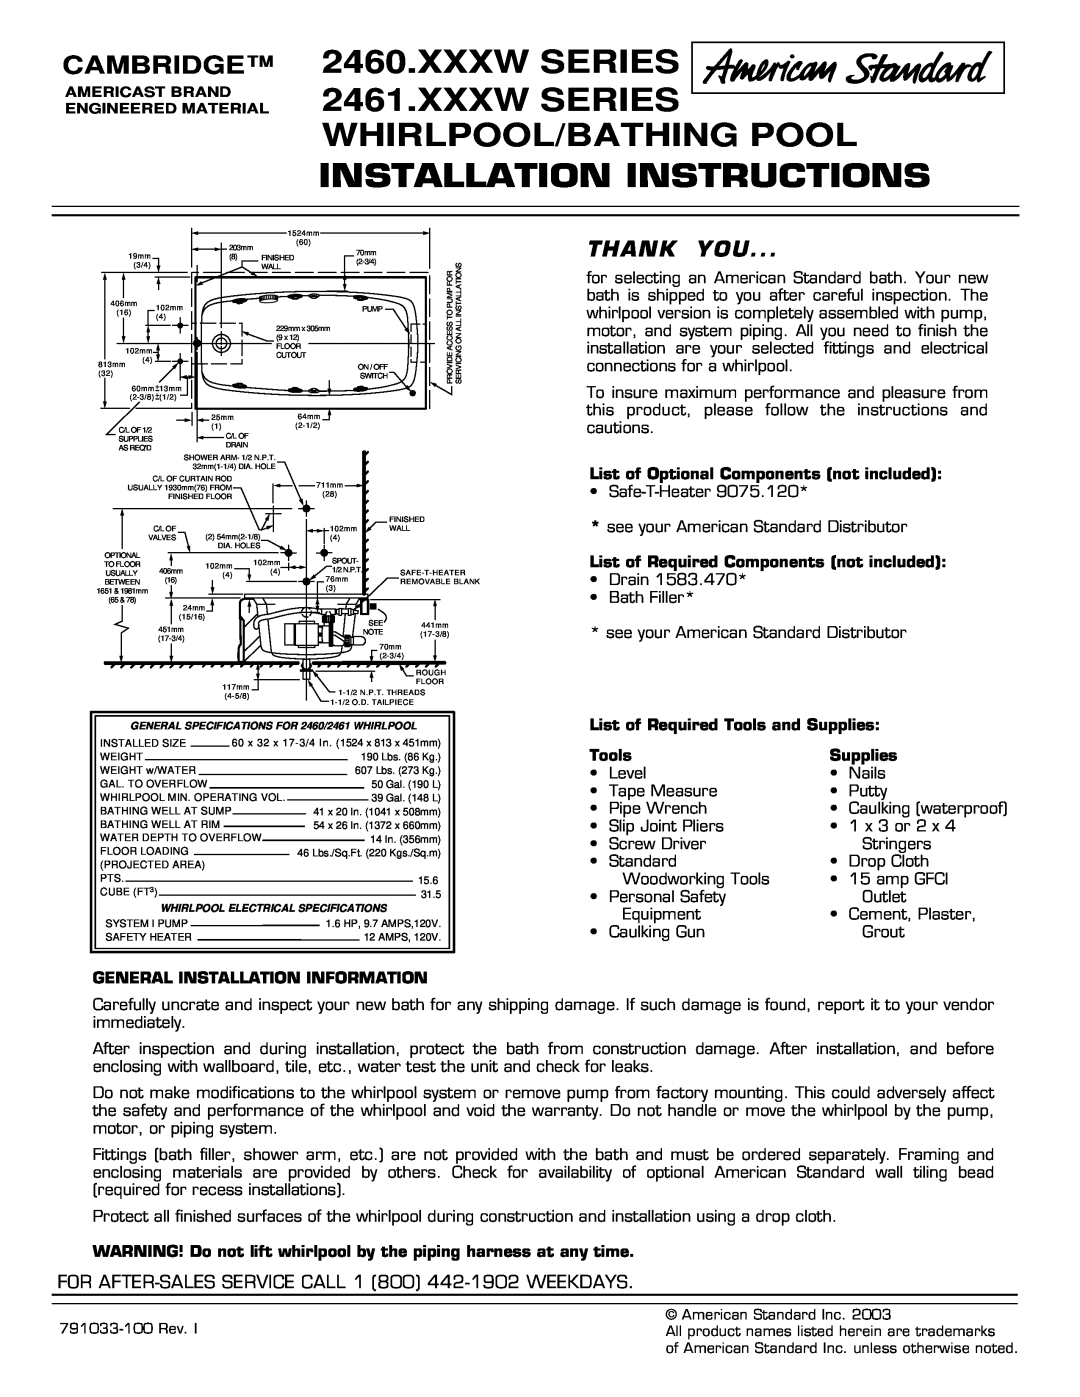 American Standard 2460.XXXW Series installation instructions Installation Instructions, Cambridge, Thank You, Tools 